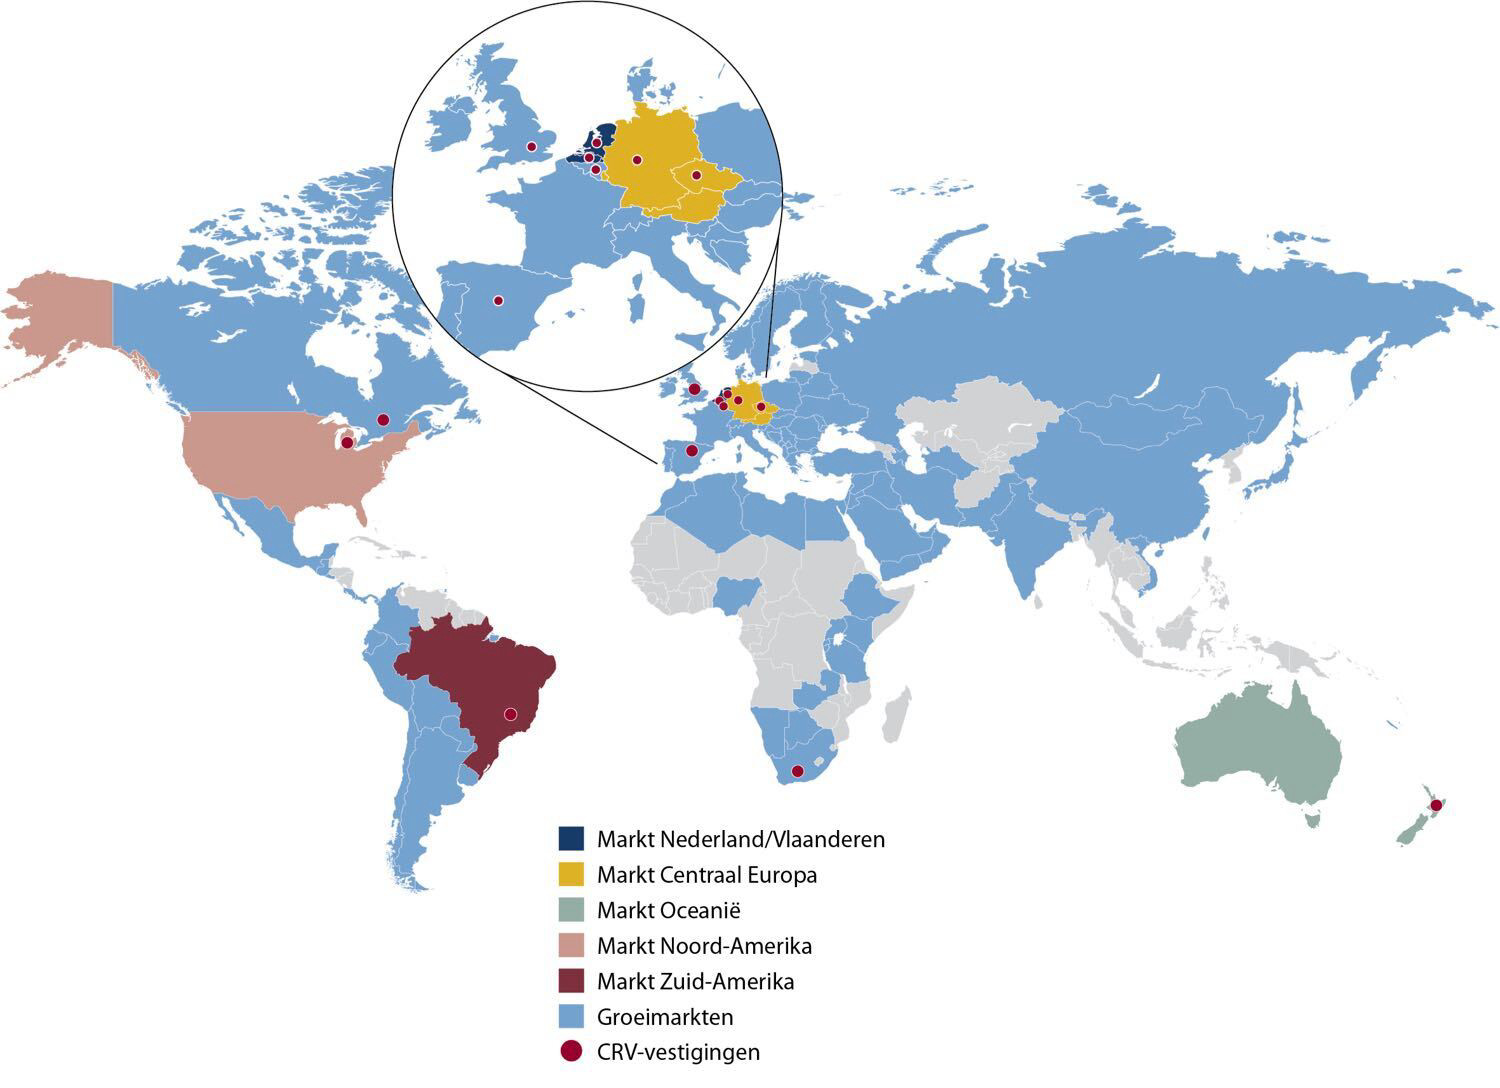 CRV around the world